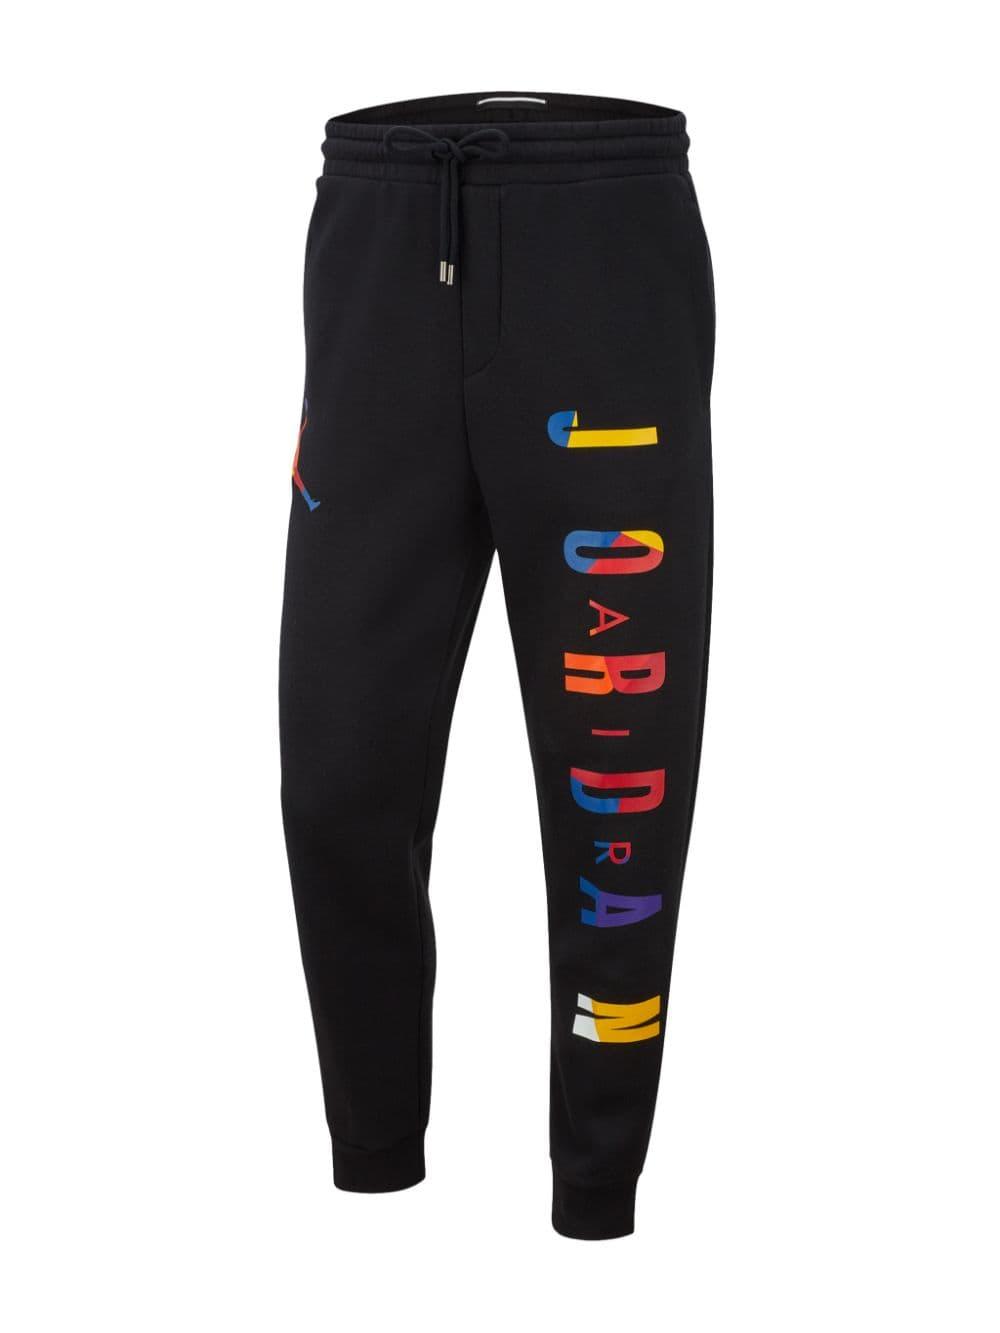 Nike Jordan Dna Pants in Black for Men - Lyst